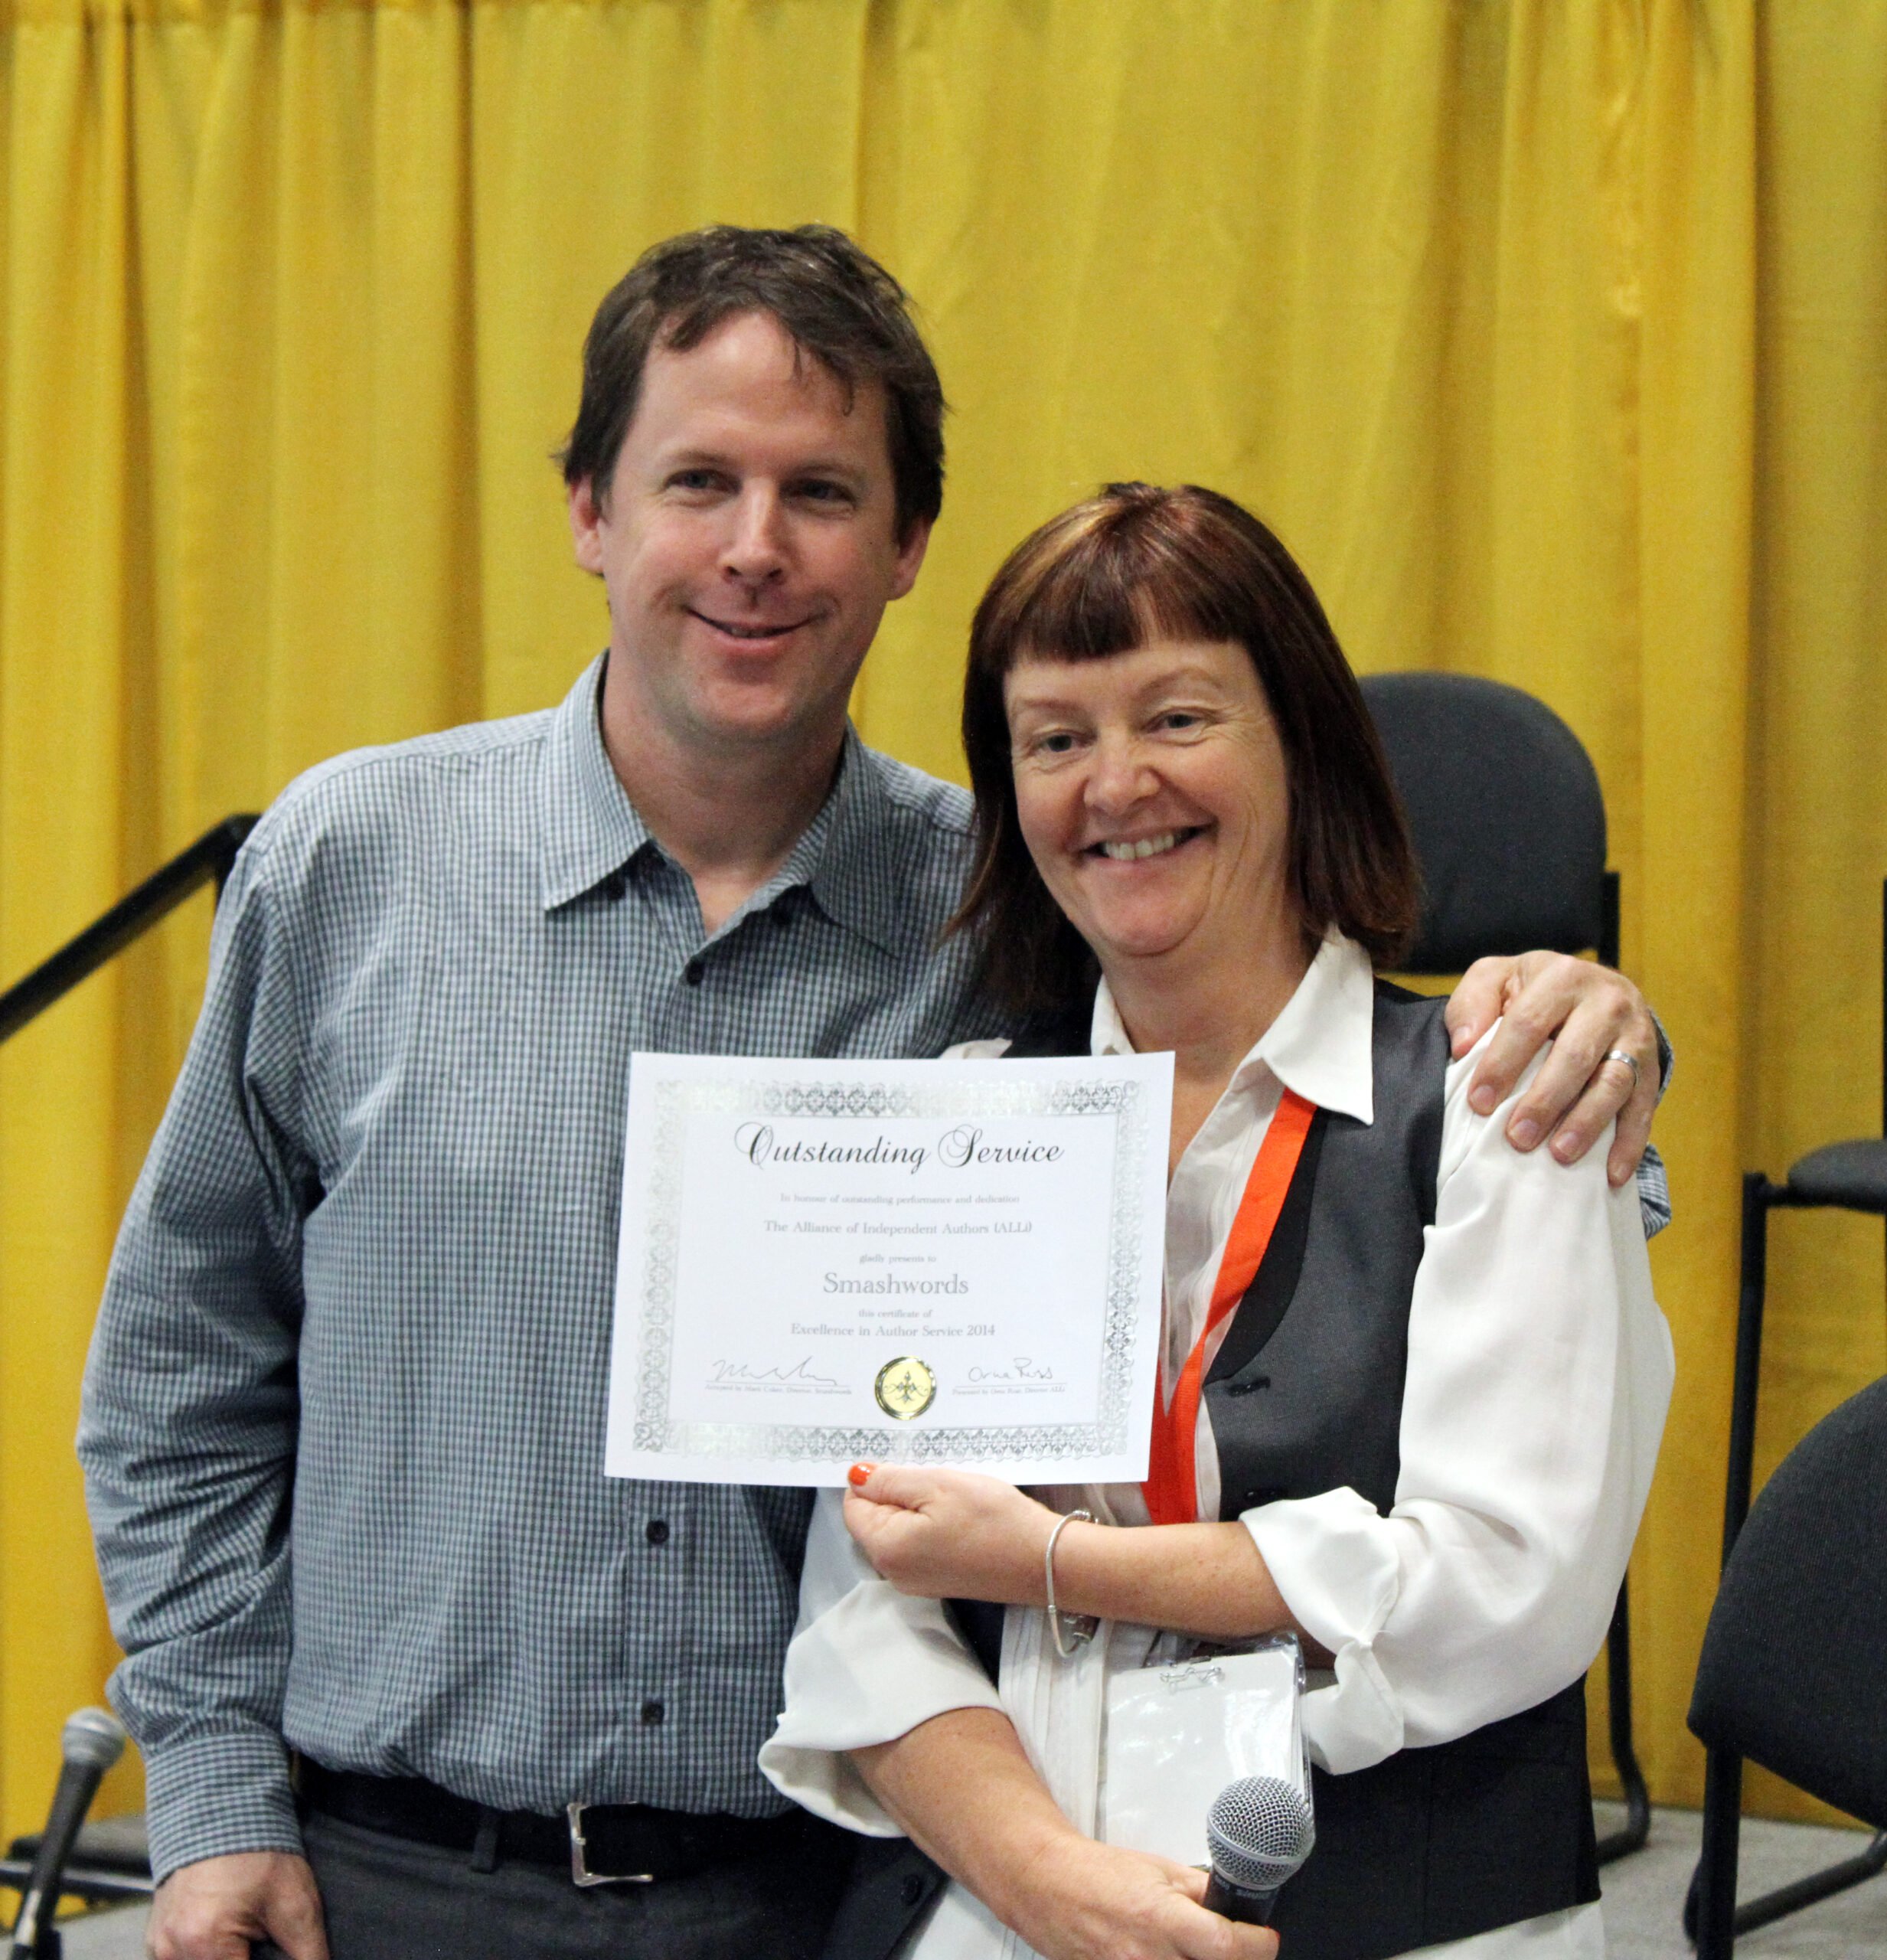 Mark Coker & Orna Ross, Indie Author Award